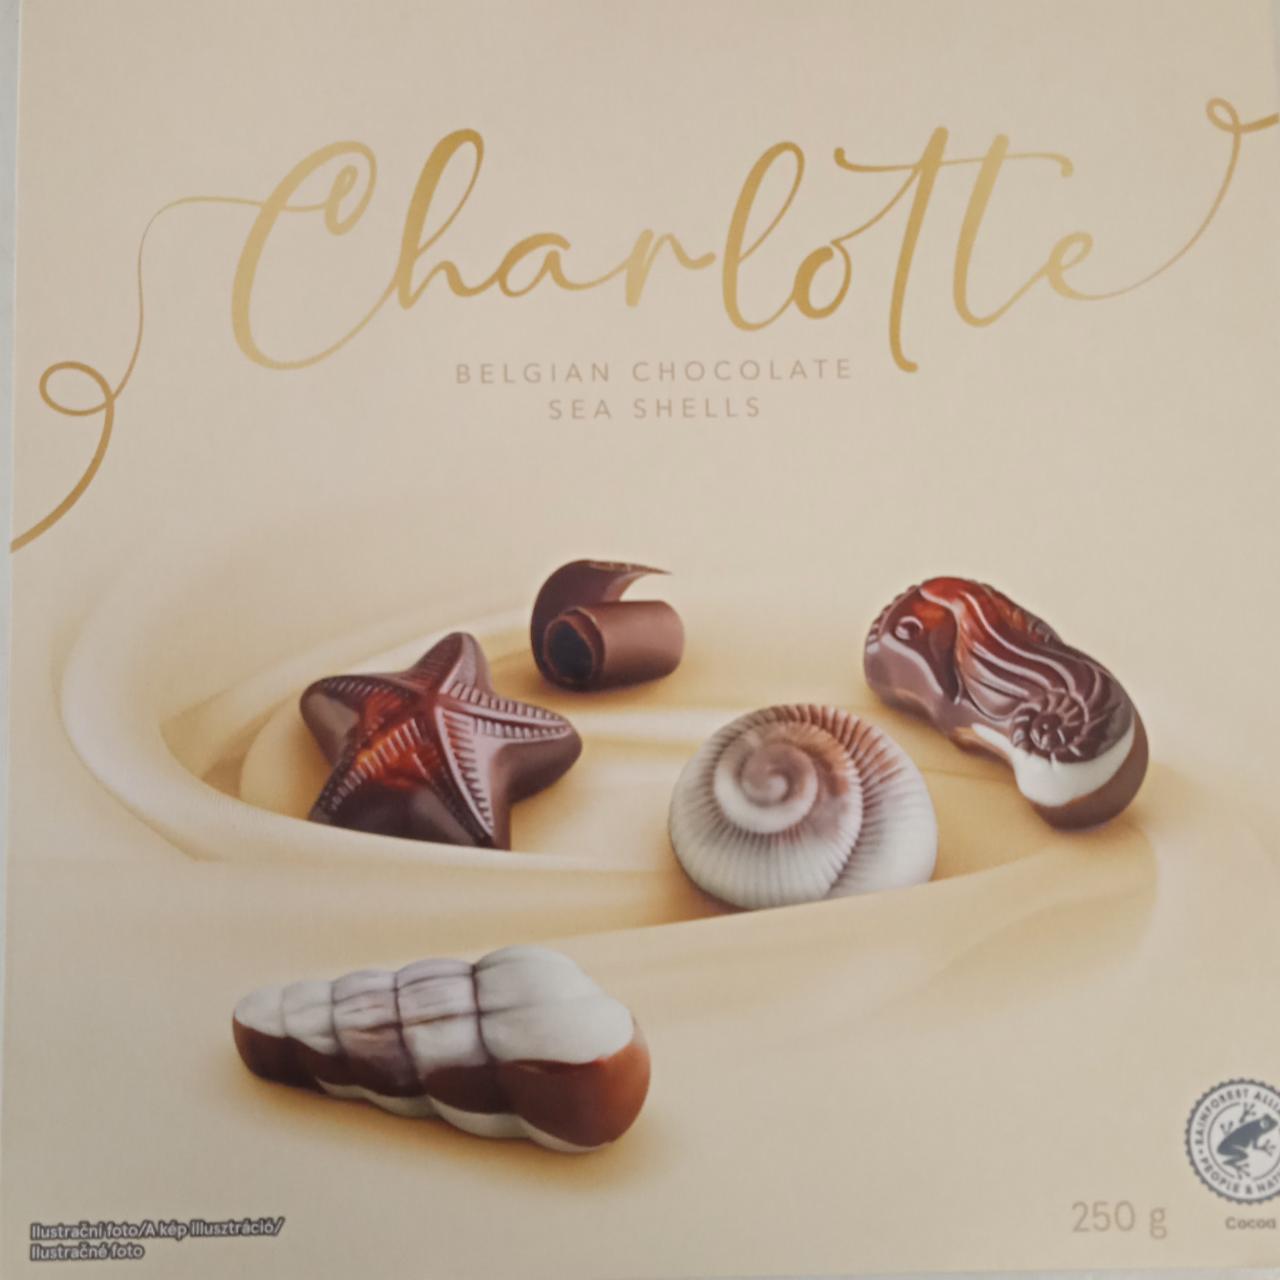 Fotografie - Charlotte belgian chocolate sea shells Tesco